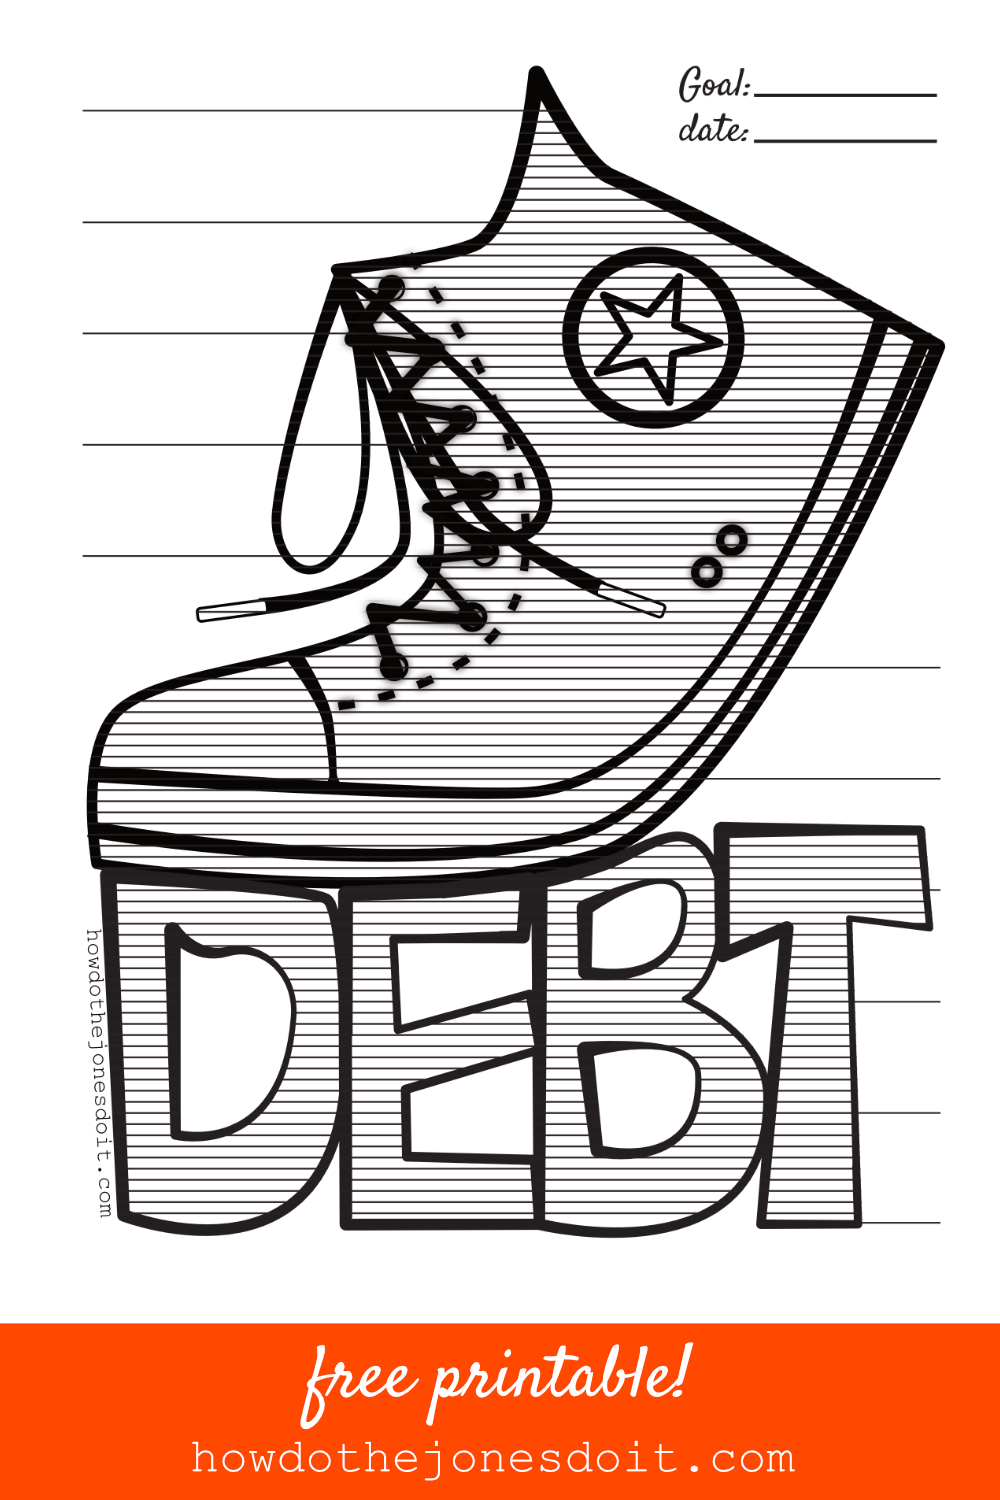 Debt Free Chart - How Do The Jones Do It - Free Printable Debt Free Charts